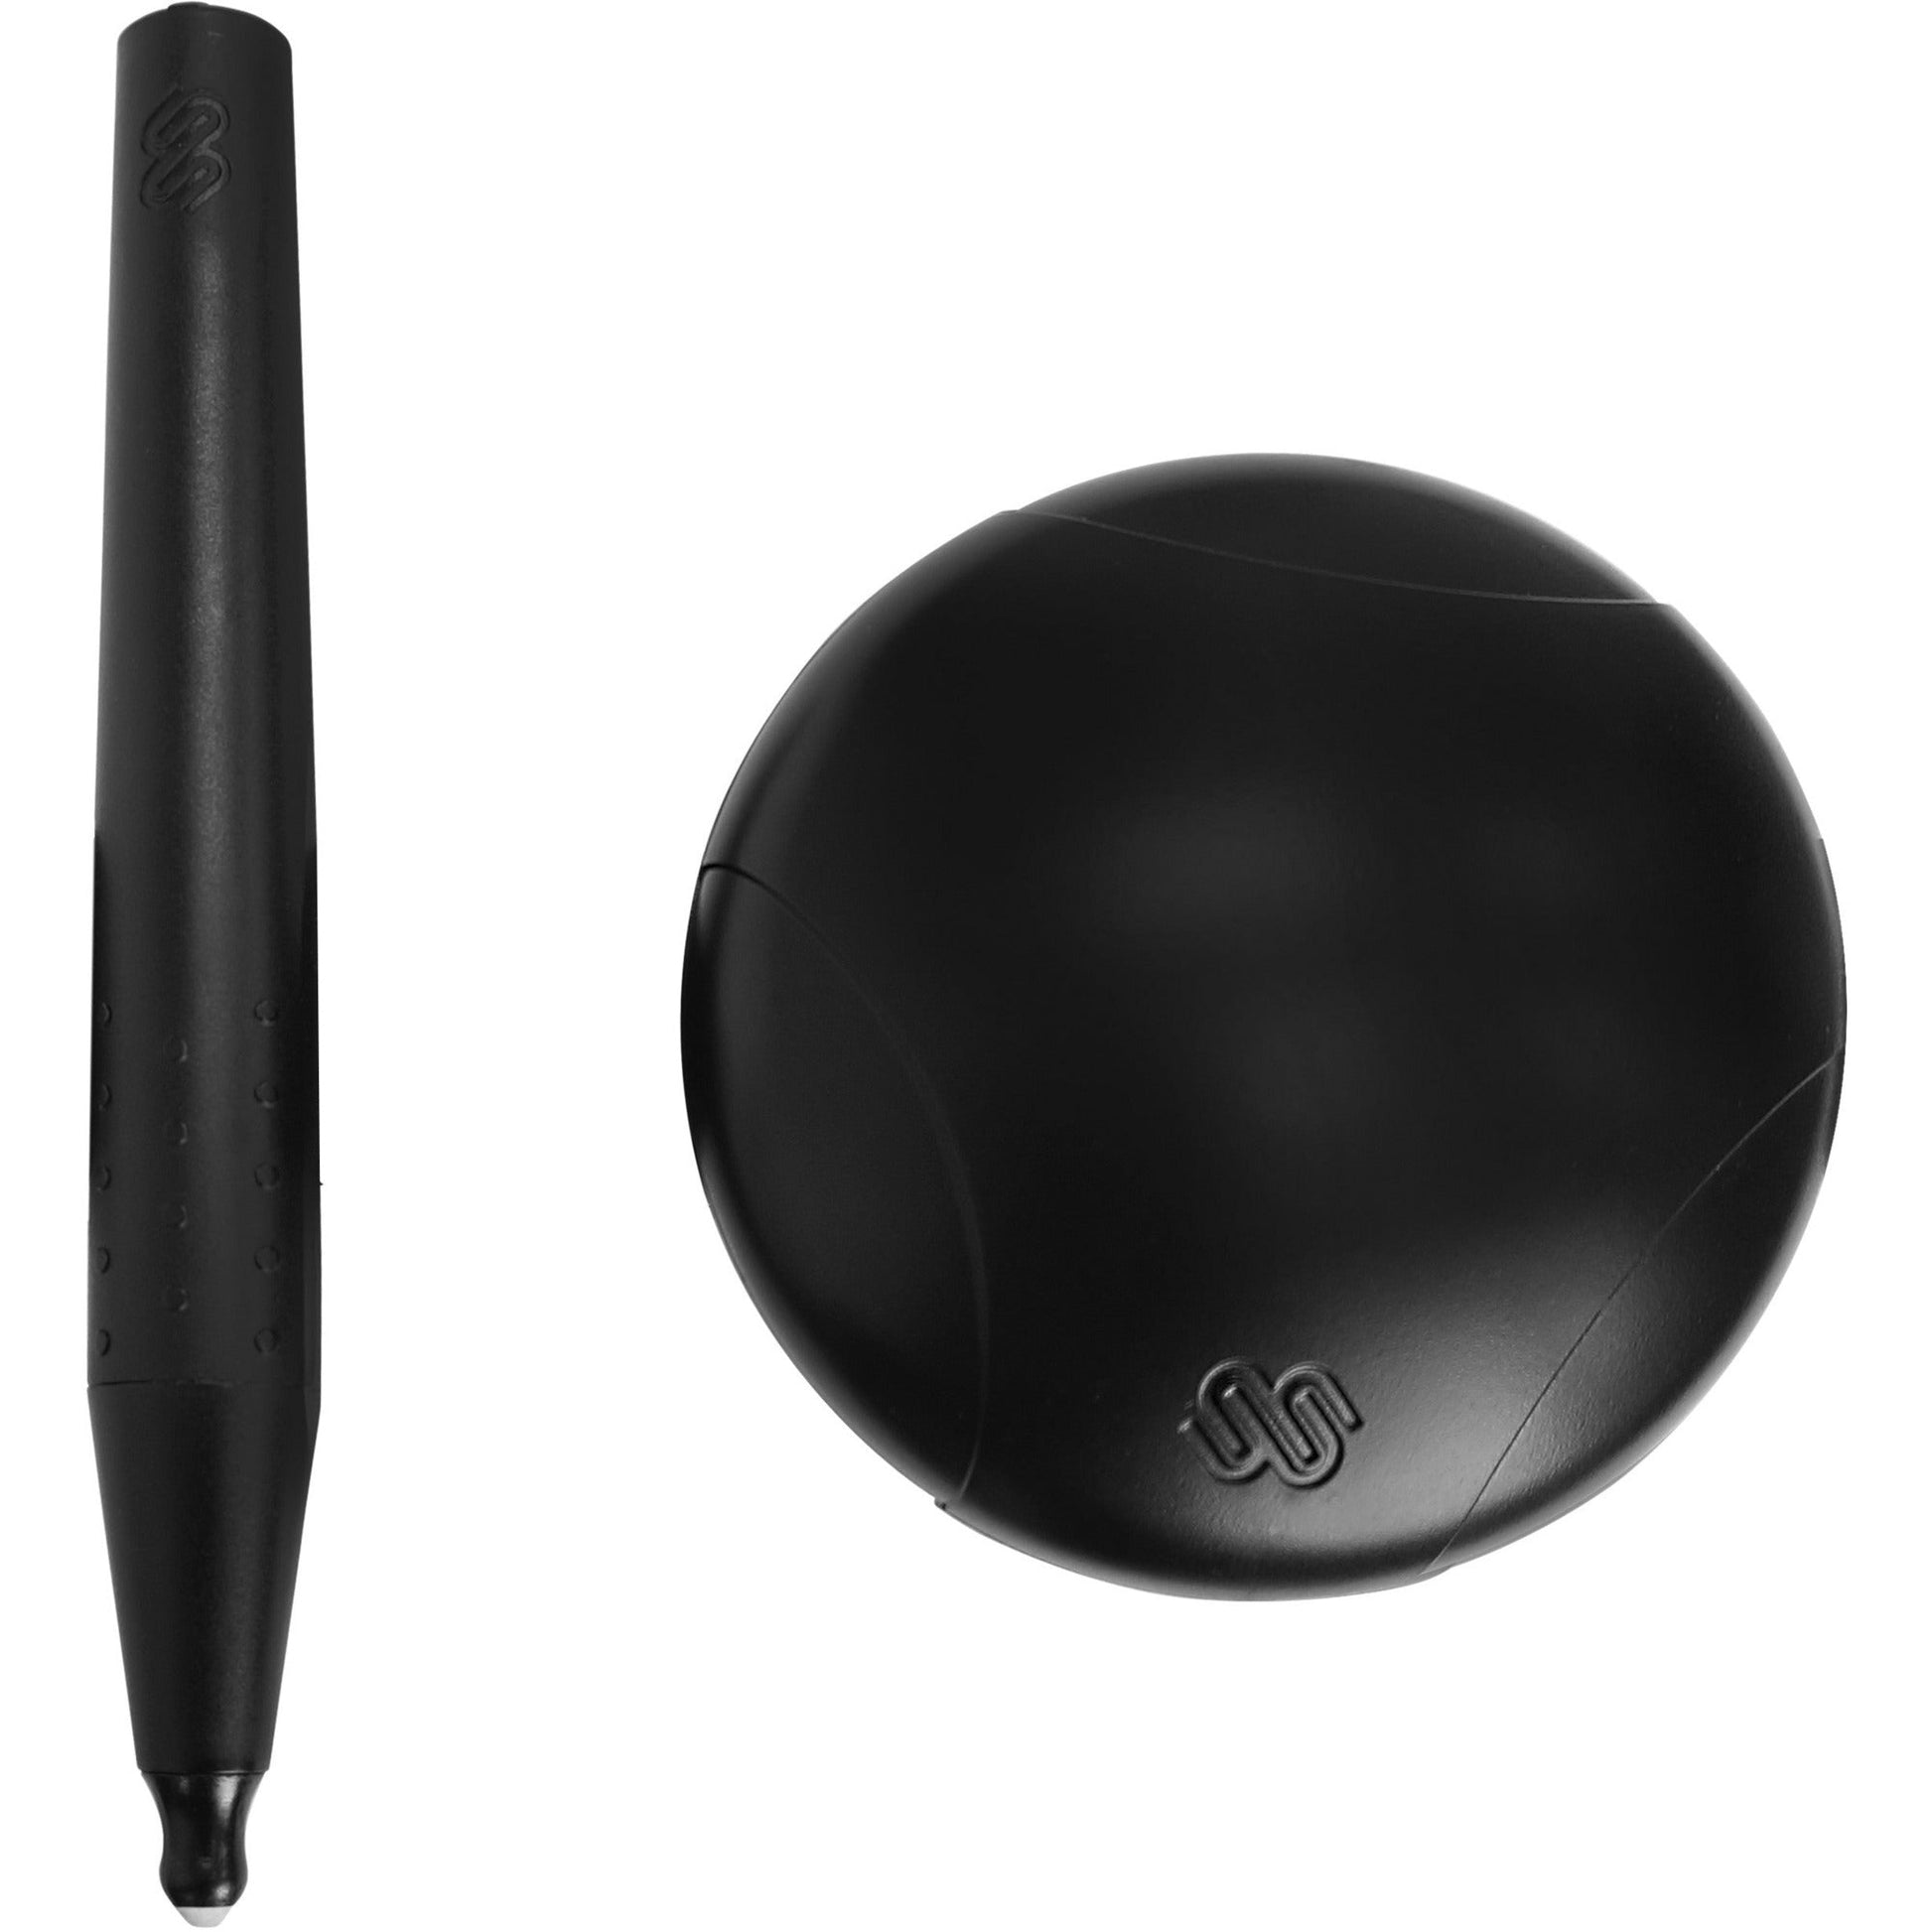 Black ShadowSense™ Touch Pen and Eraser Kit